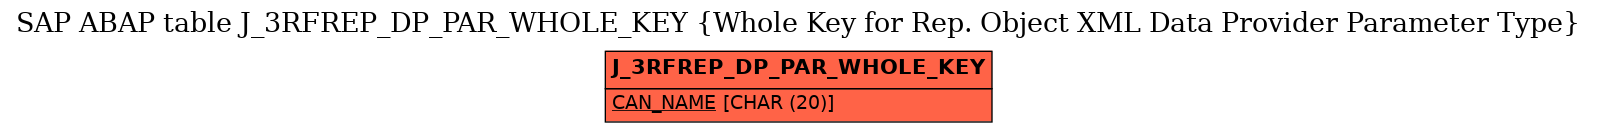 E-R Diagram for table J_3RFREP_DP_PAR_WHOLE_KEY (Whole Key for Rep. Object XML Data Provider Parameter Type)